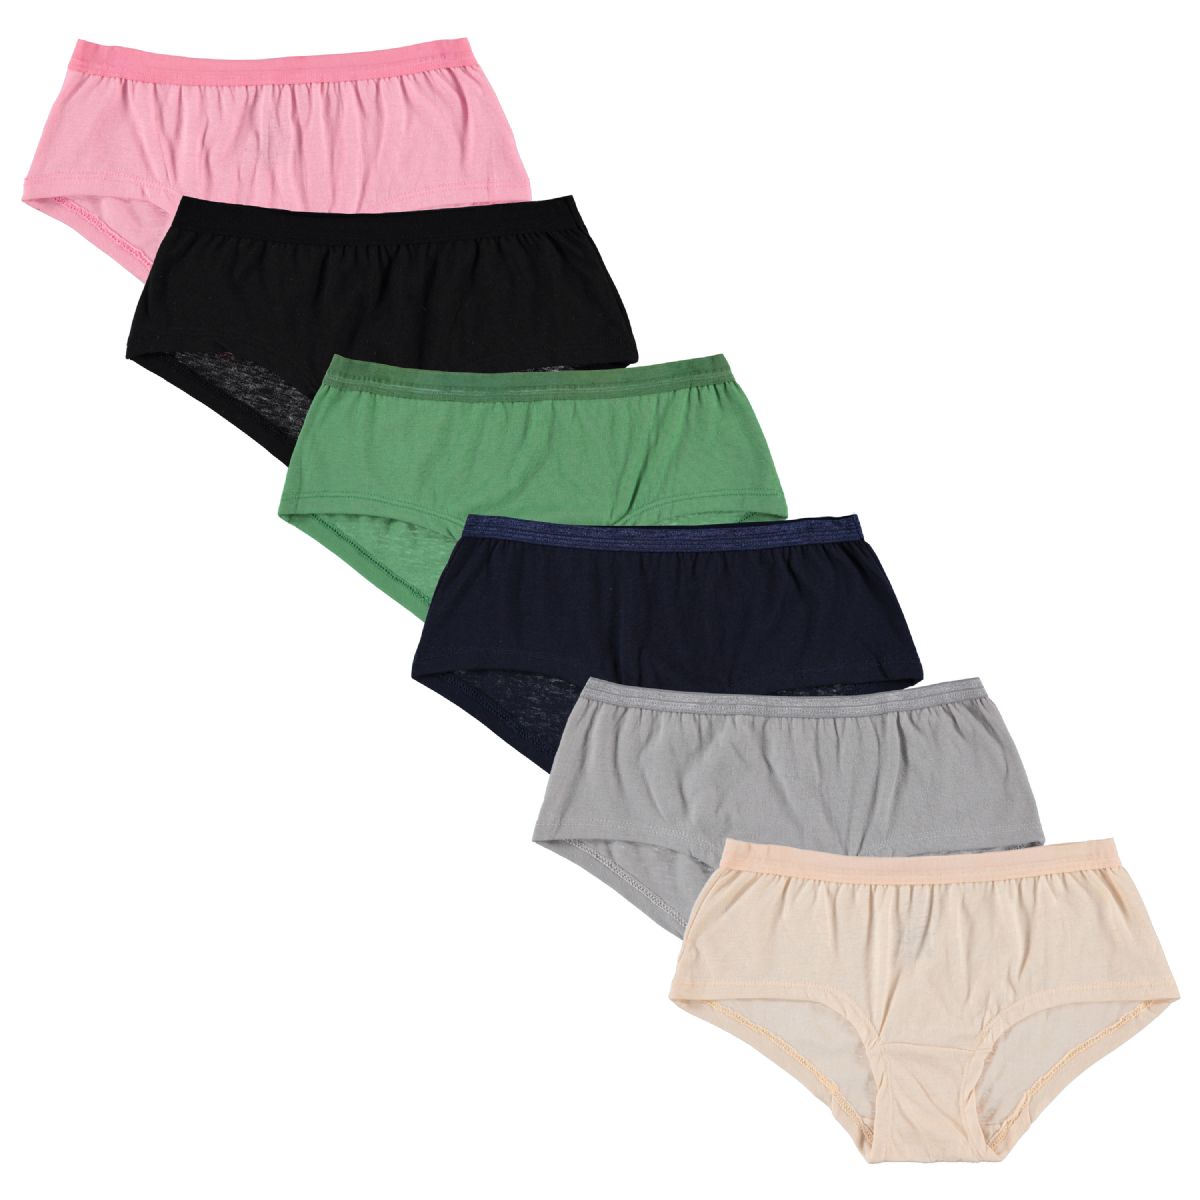 180 Bulk Yacht & Smith Womens Assorted Color Underwear, Panties In Bulk, 95% Cotton - Size L